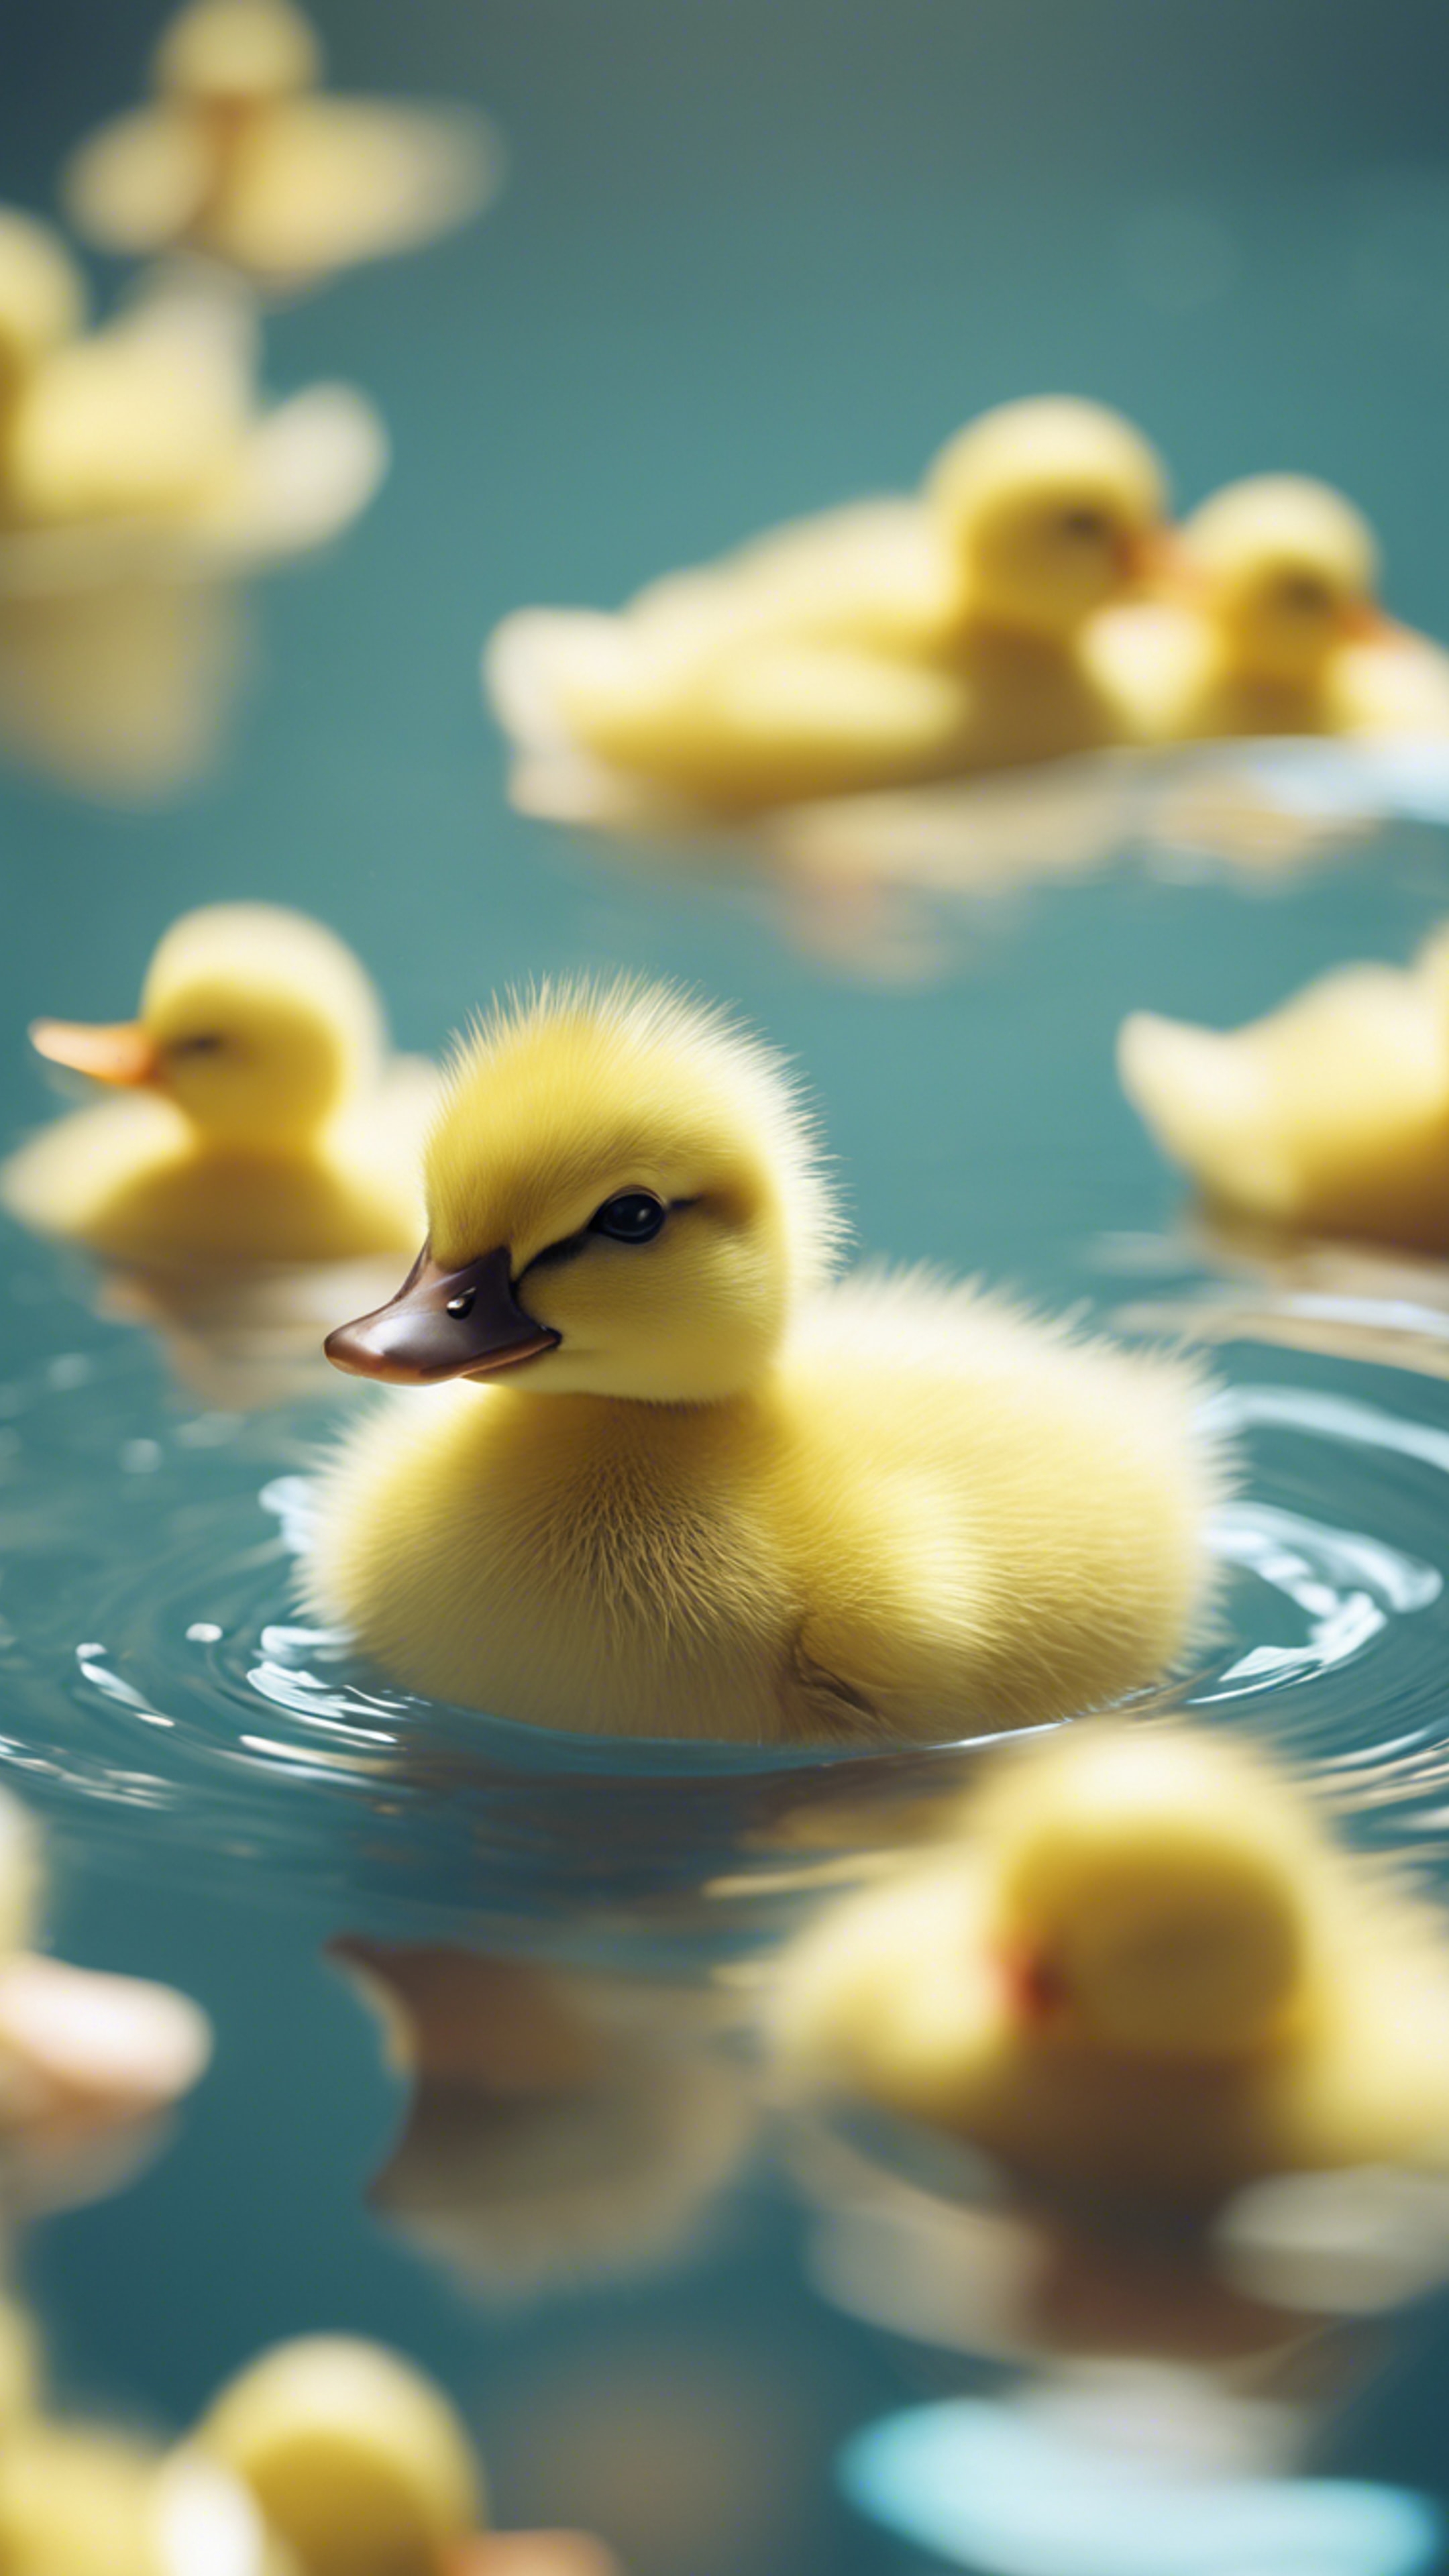 A small, chubby, kawaii yellow duckling swimming in a pastel blue pond. duvar kağıdı[2b07b187d2cc4e759cc9]